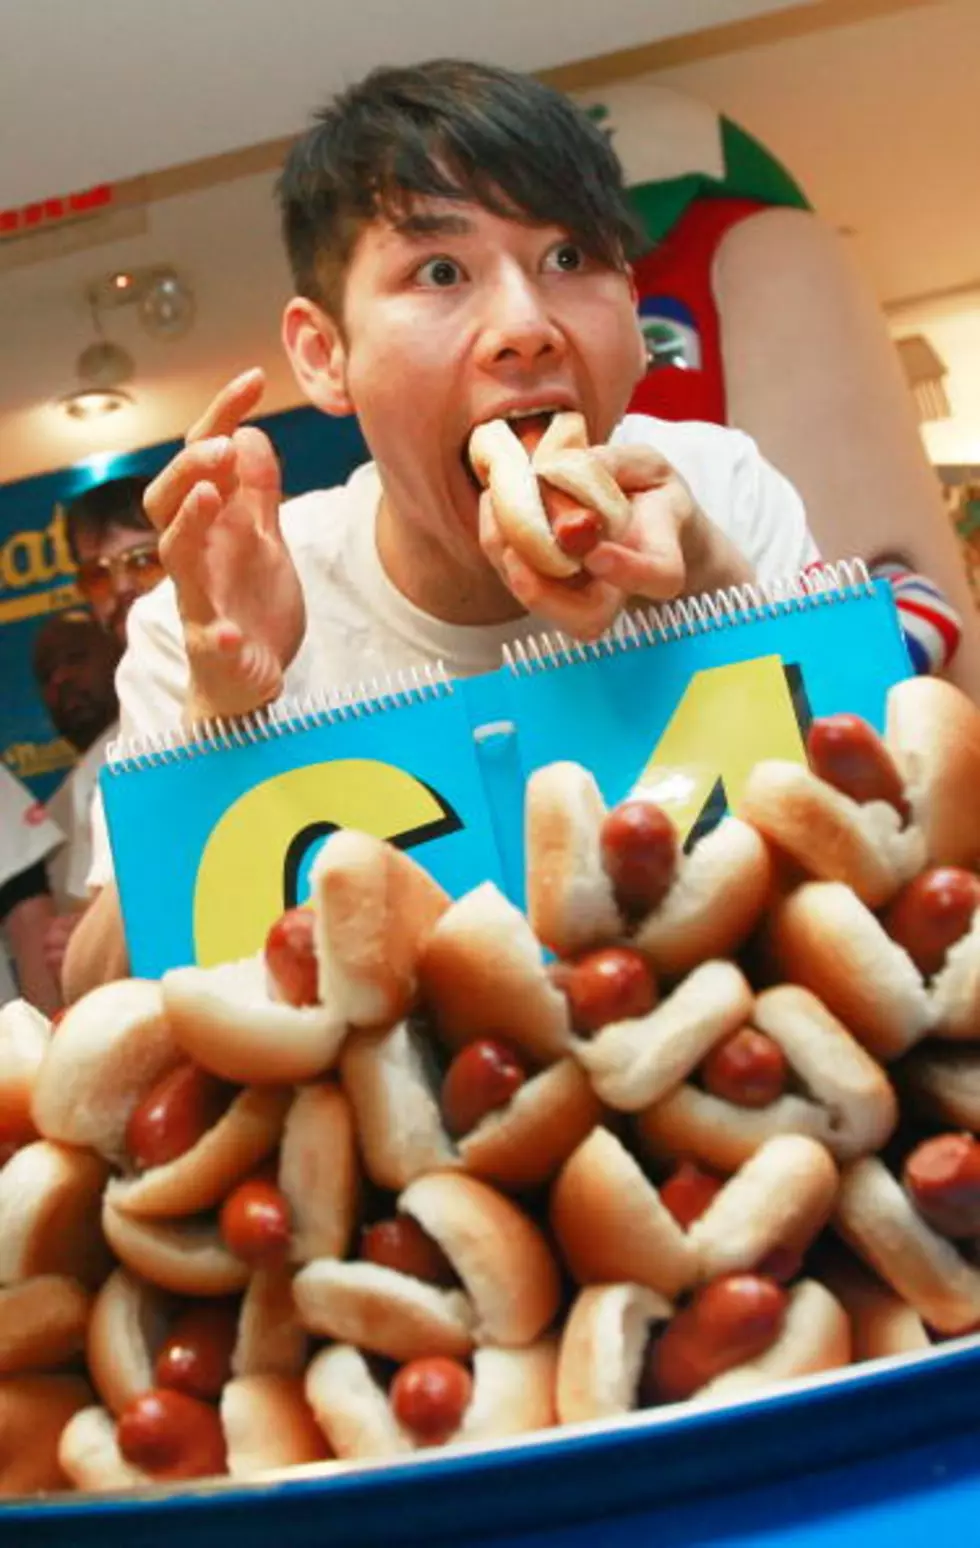 115-Pound Woman Wins Illinois Hot Dog Eating Contest